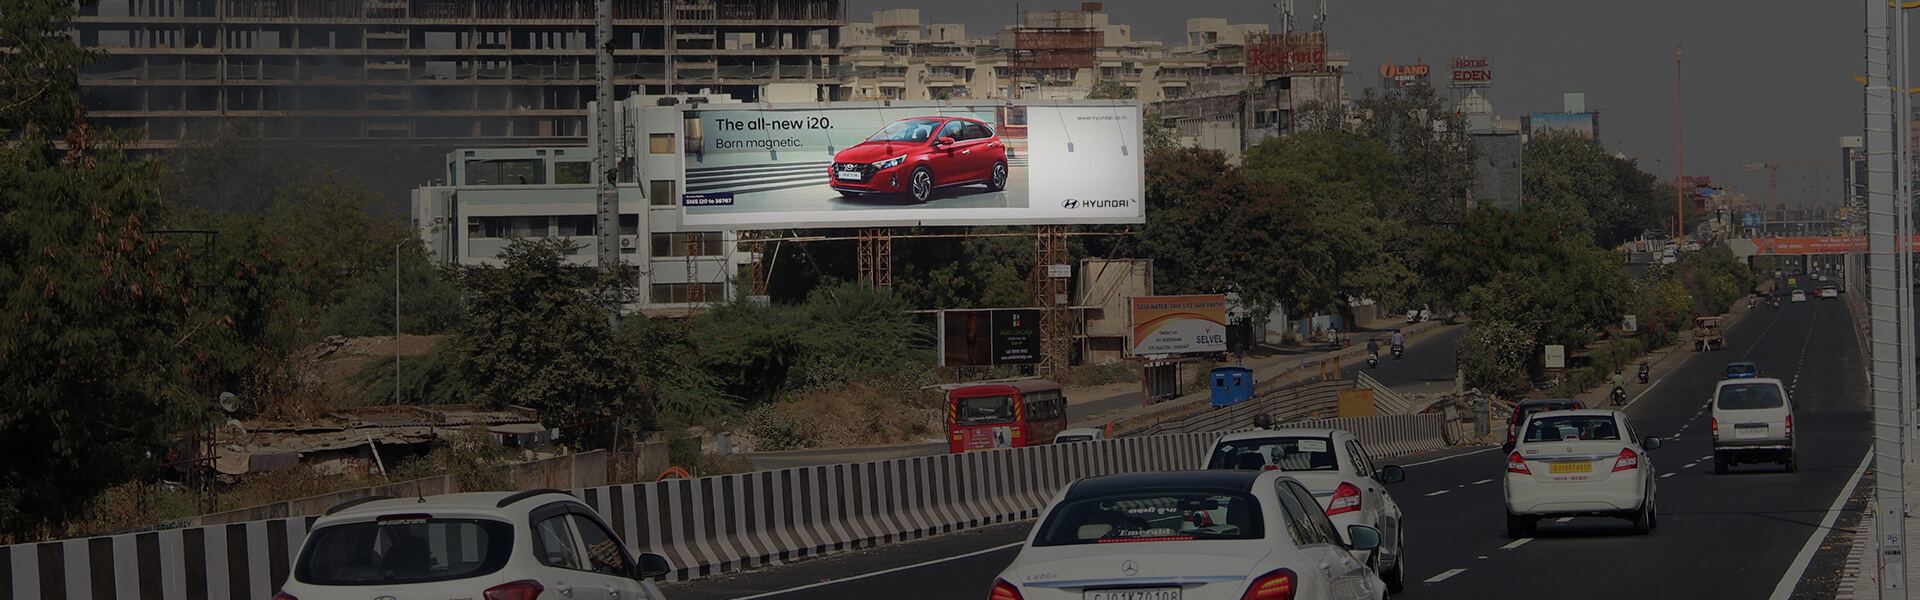 Hoarding Advertising Agency in Gujarat